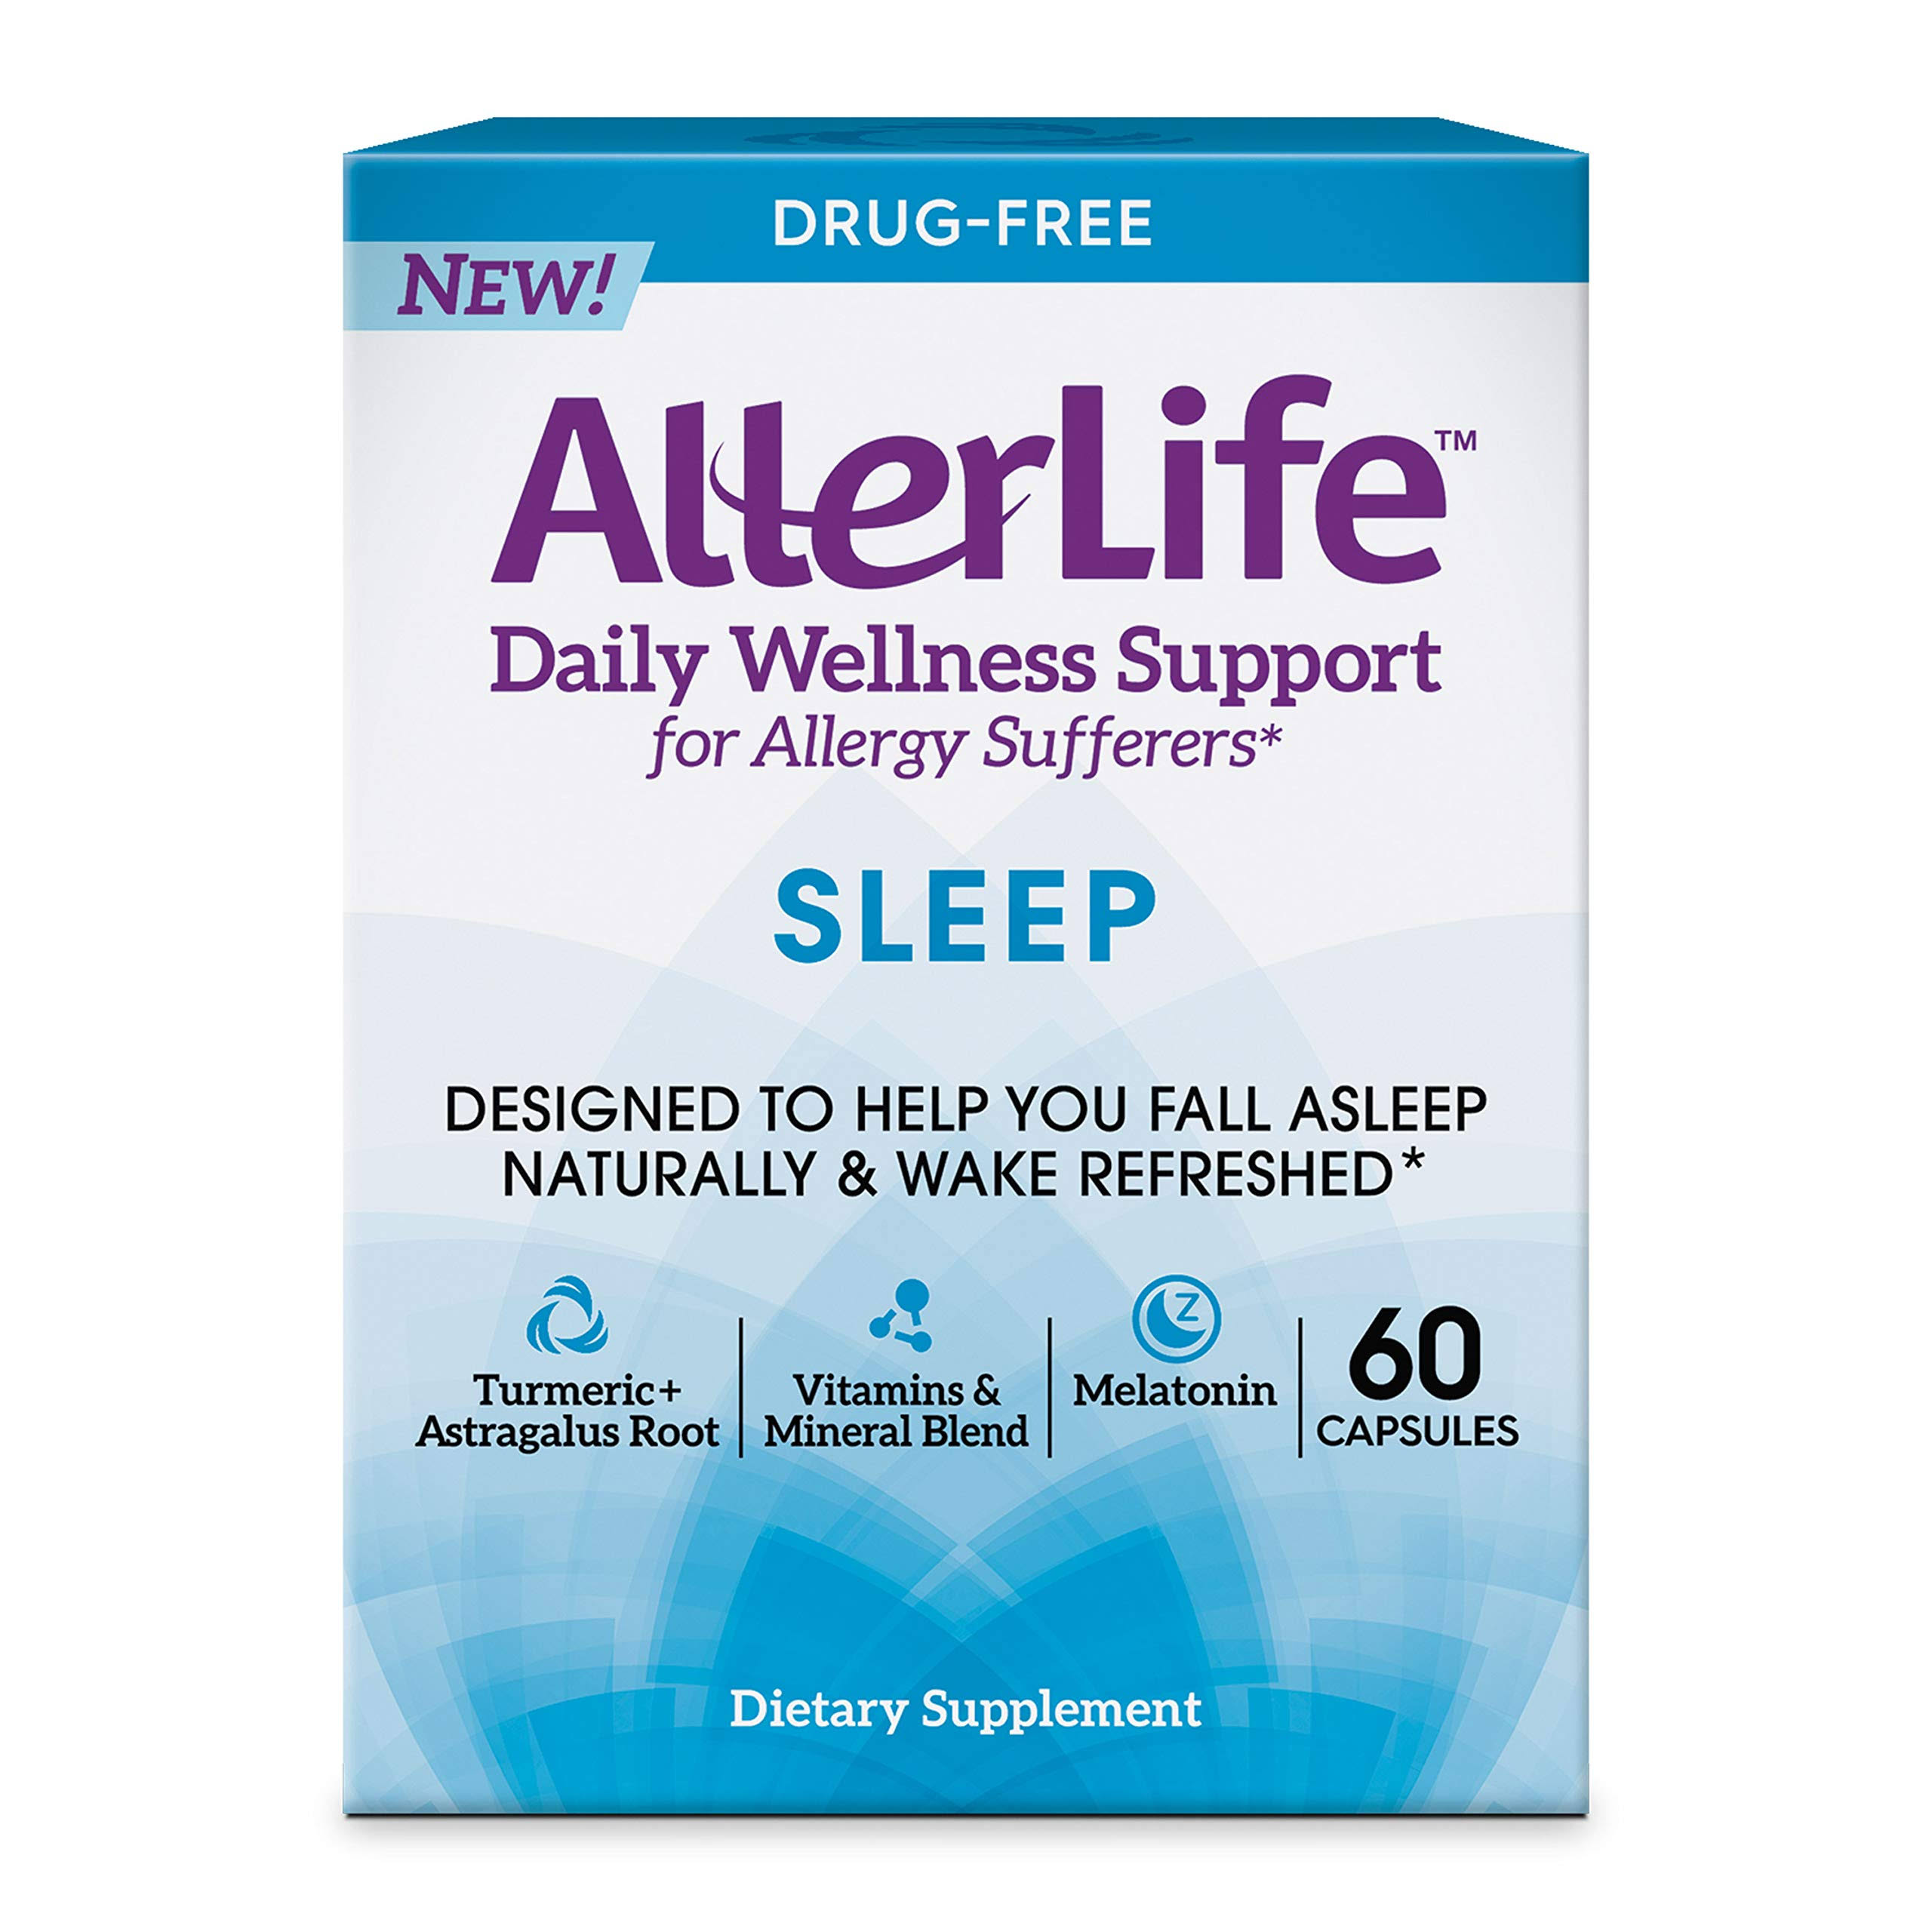 Allerlife Daily Wellness Support, Sleep, Drug-Free, Capsules - 60